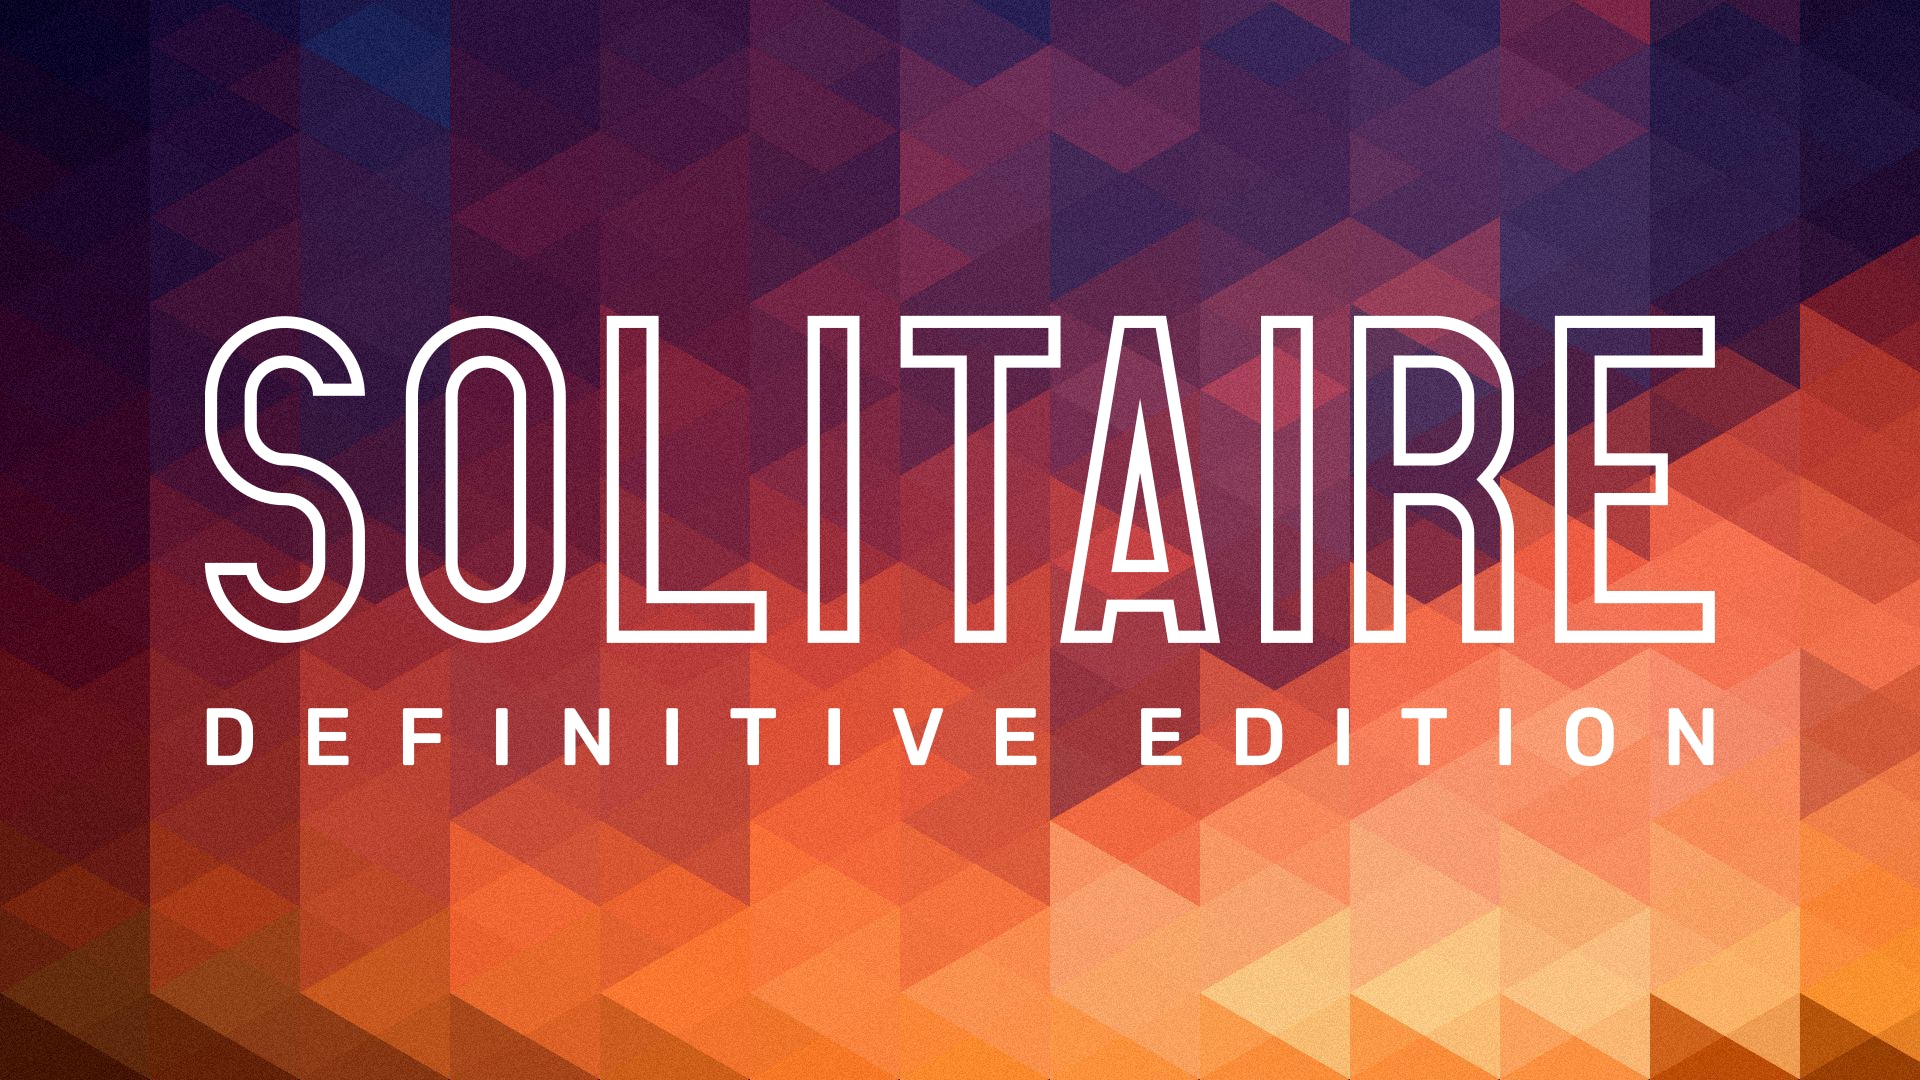 Solitaire Definitive Edition